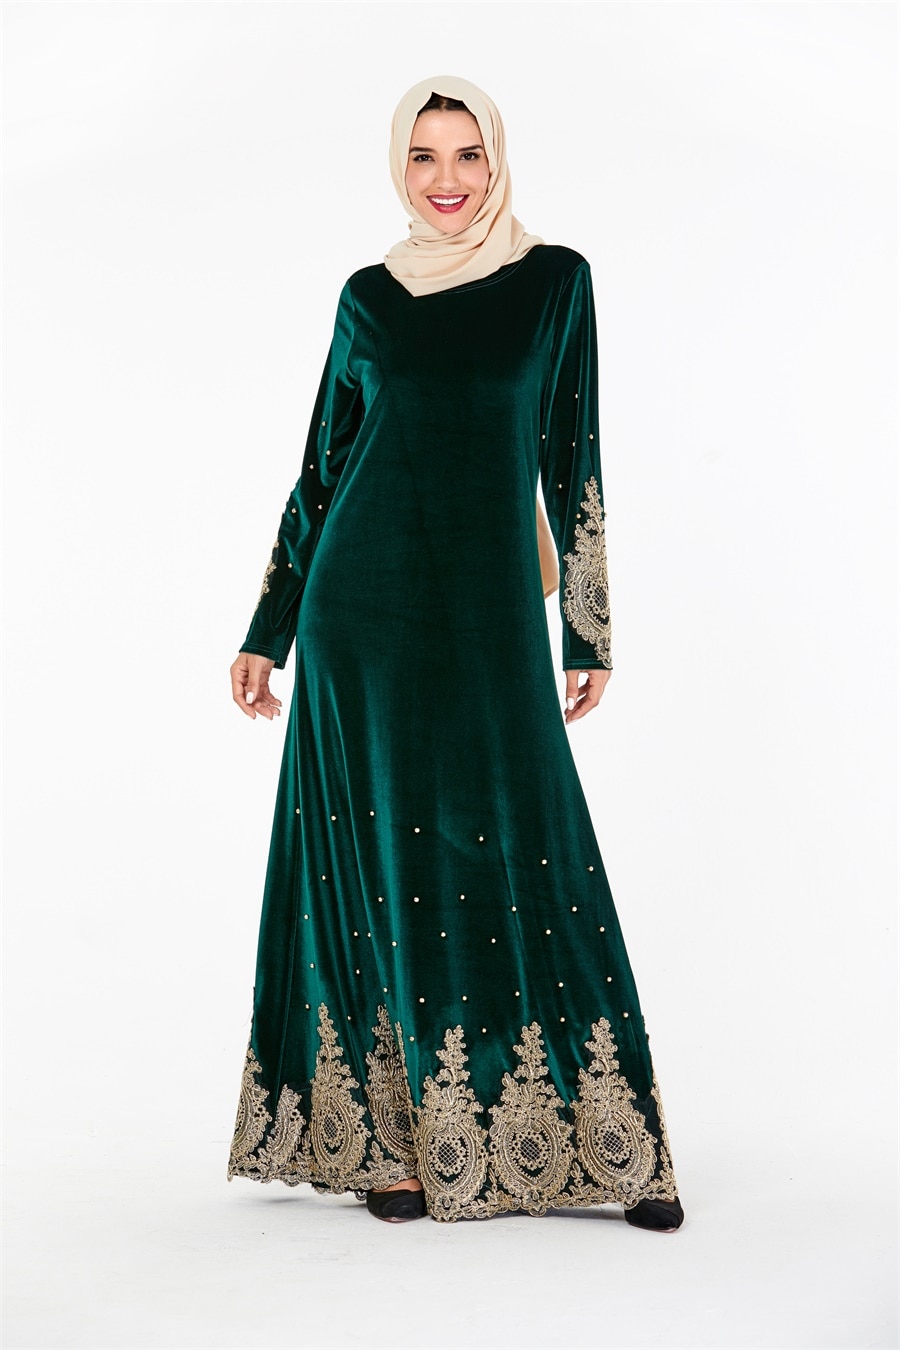 Siskakia Muslim Evening Dresses Paisle Embroidered Beads Velvet Long Dress Plus Size Arabian Dubai Morocco Clothes